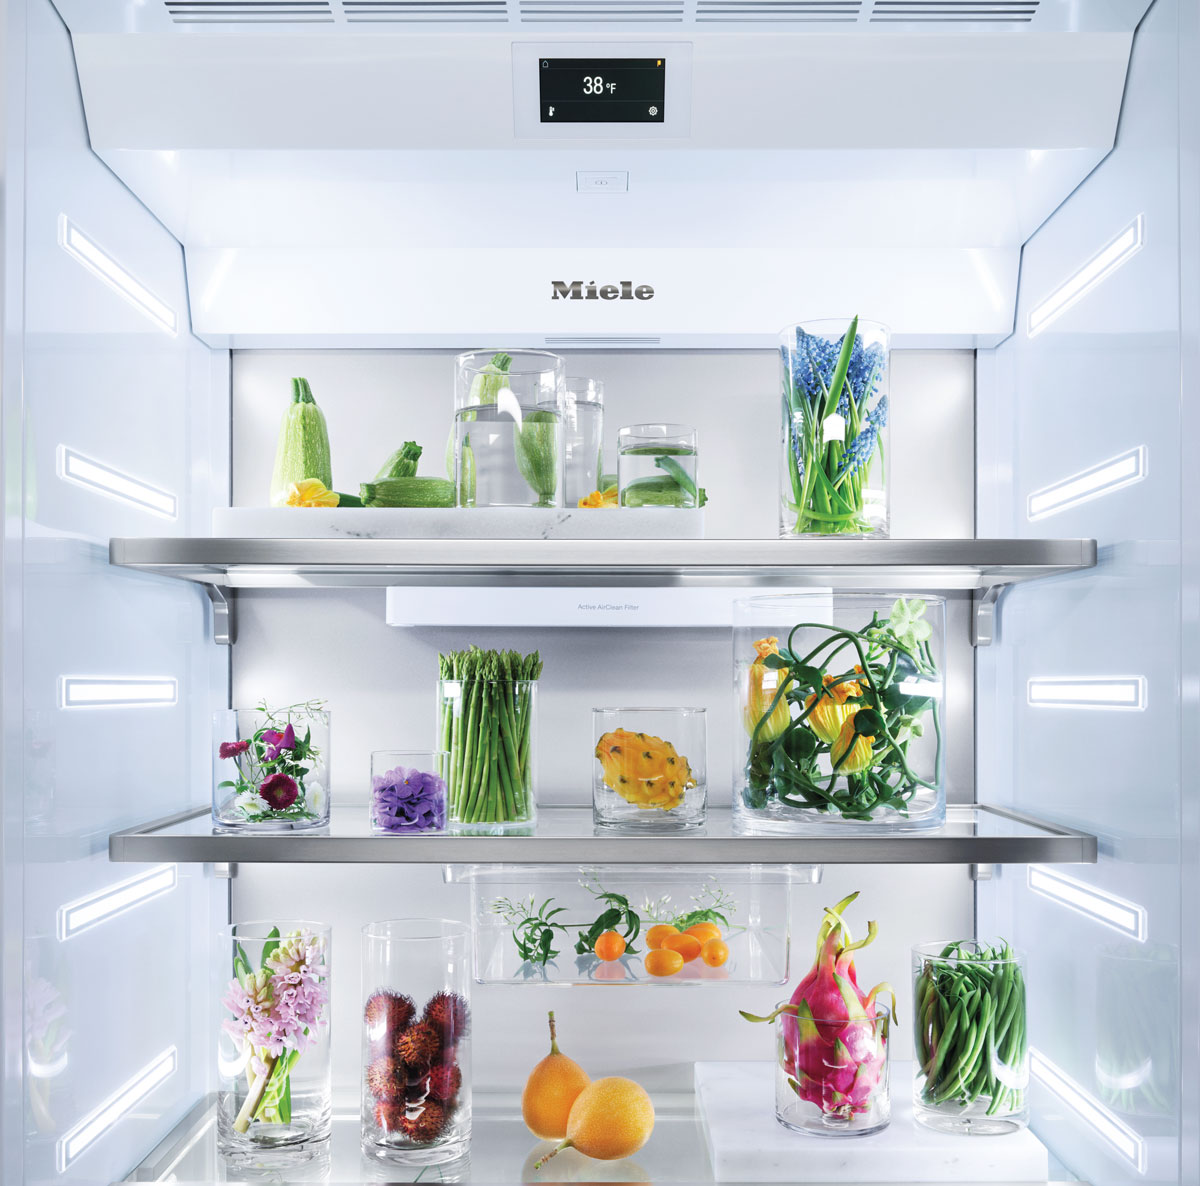 Interior of Miele fridge with food inside